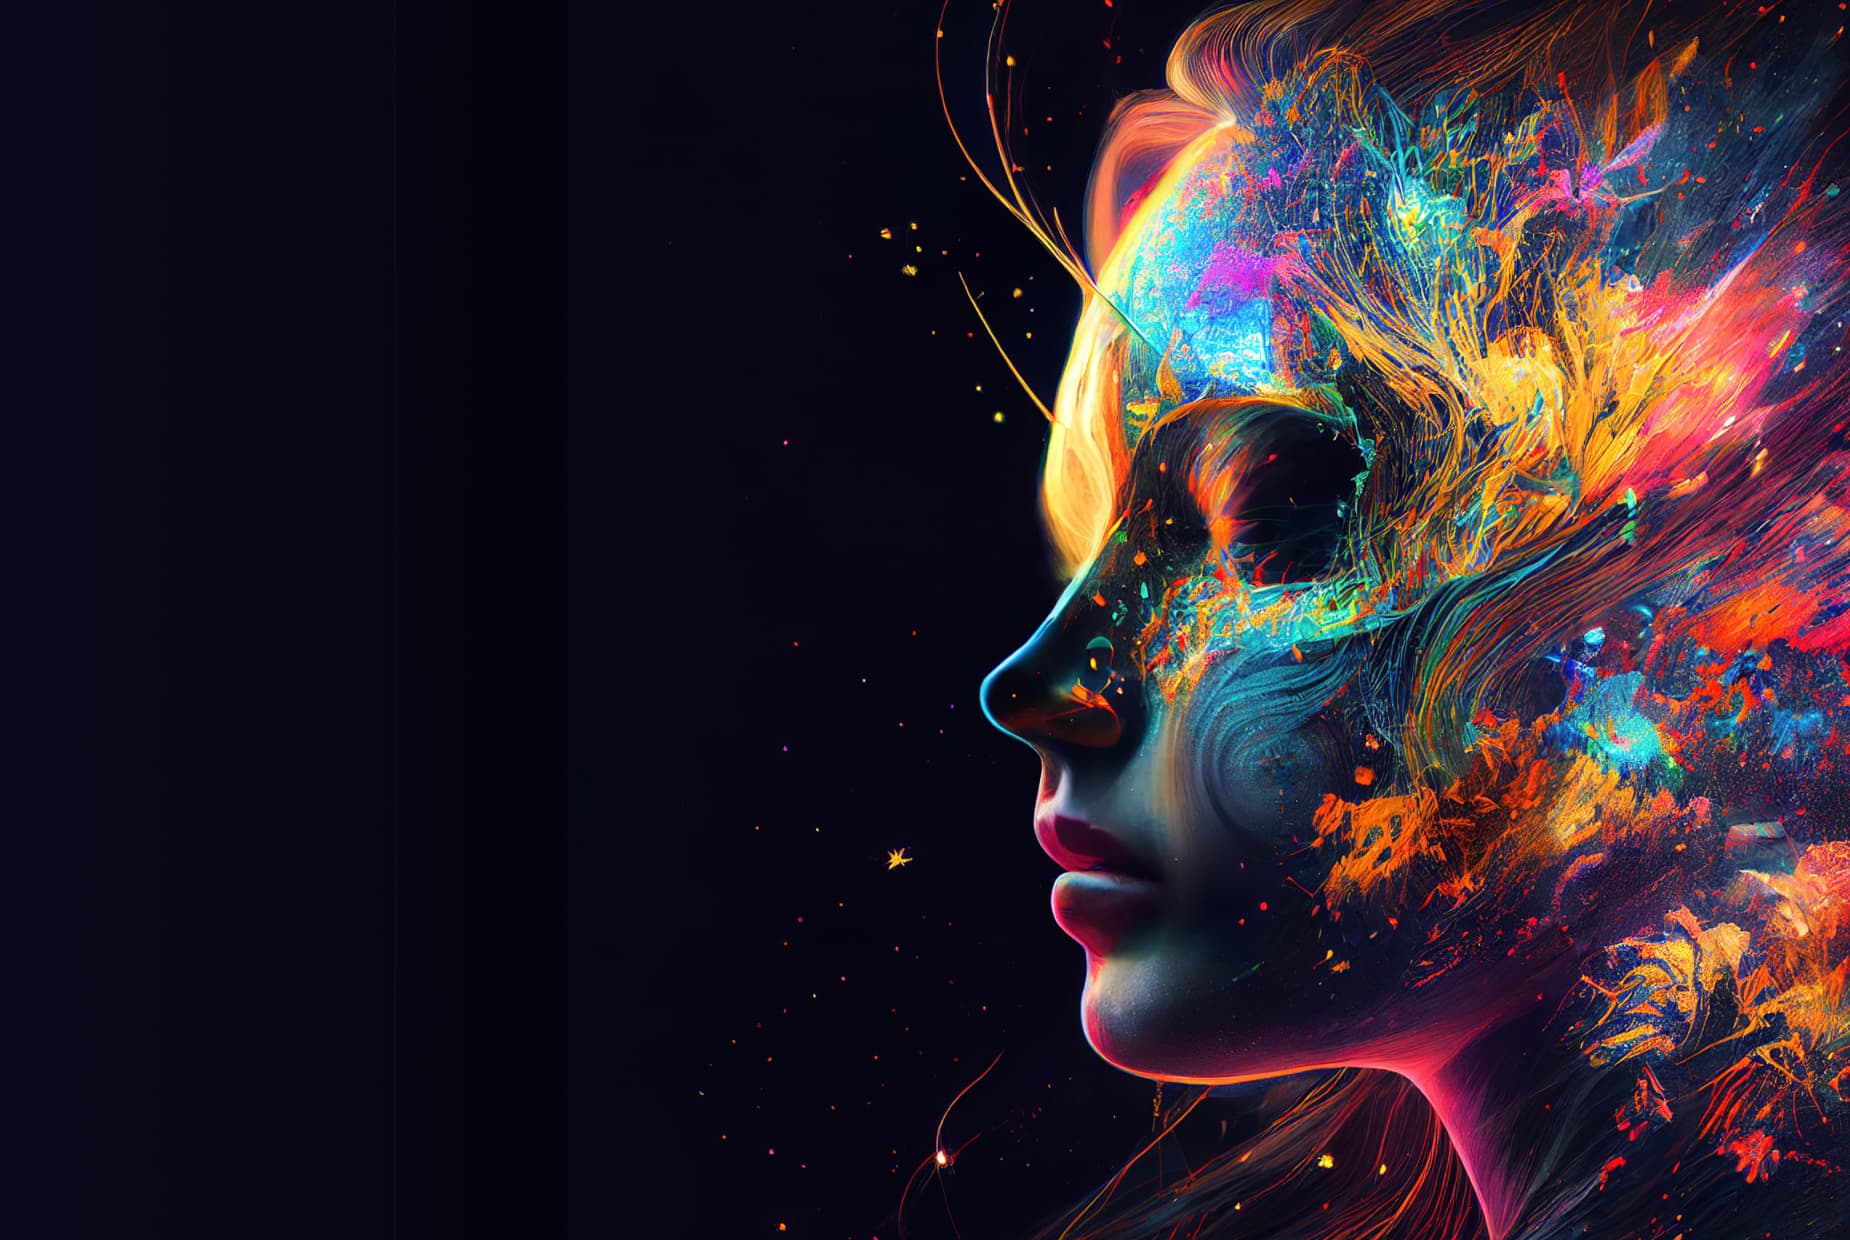 AI가 생성한 다채로운 추상 미술이 포함된 여성의 머리 이미지.